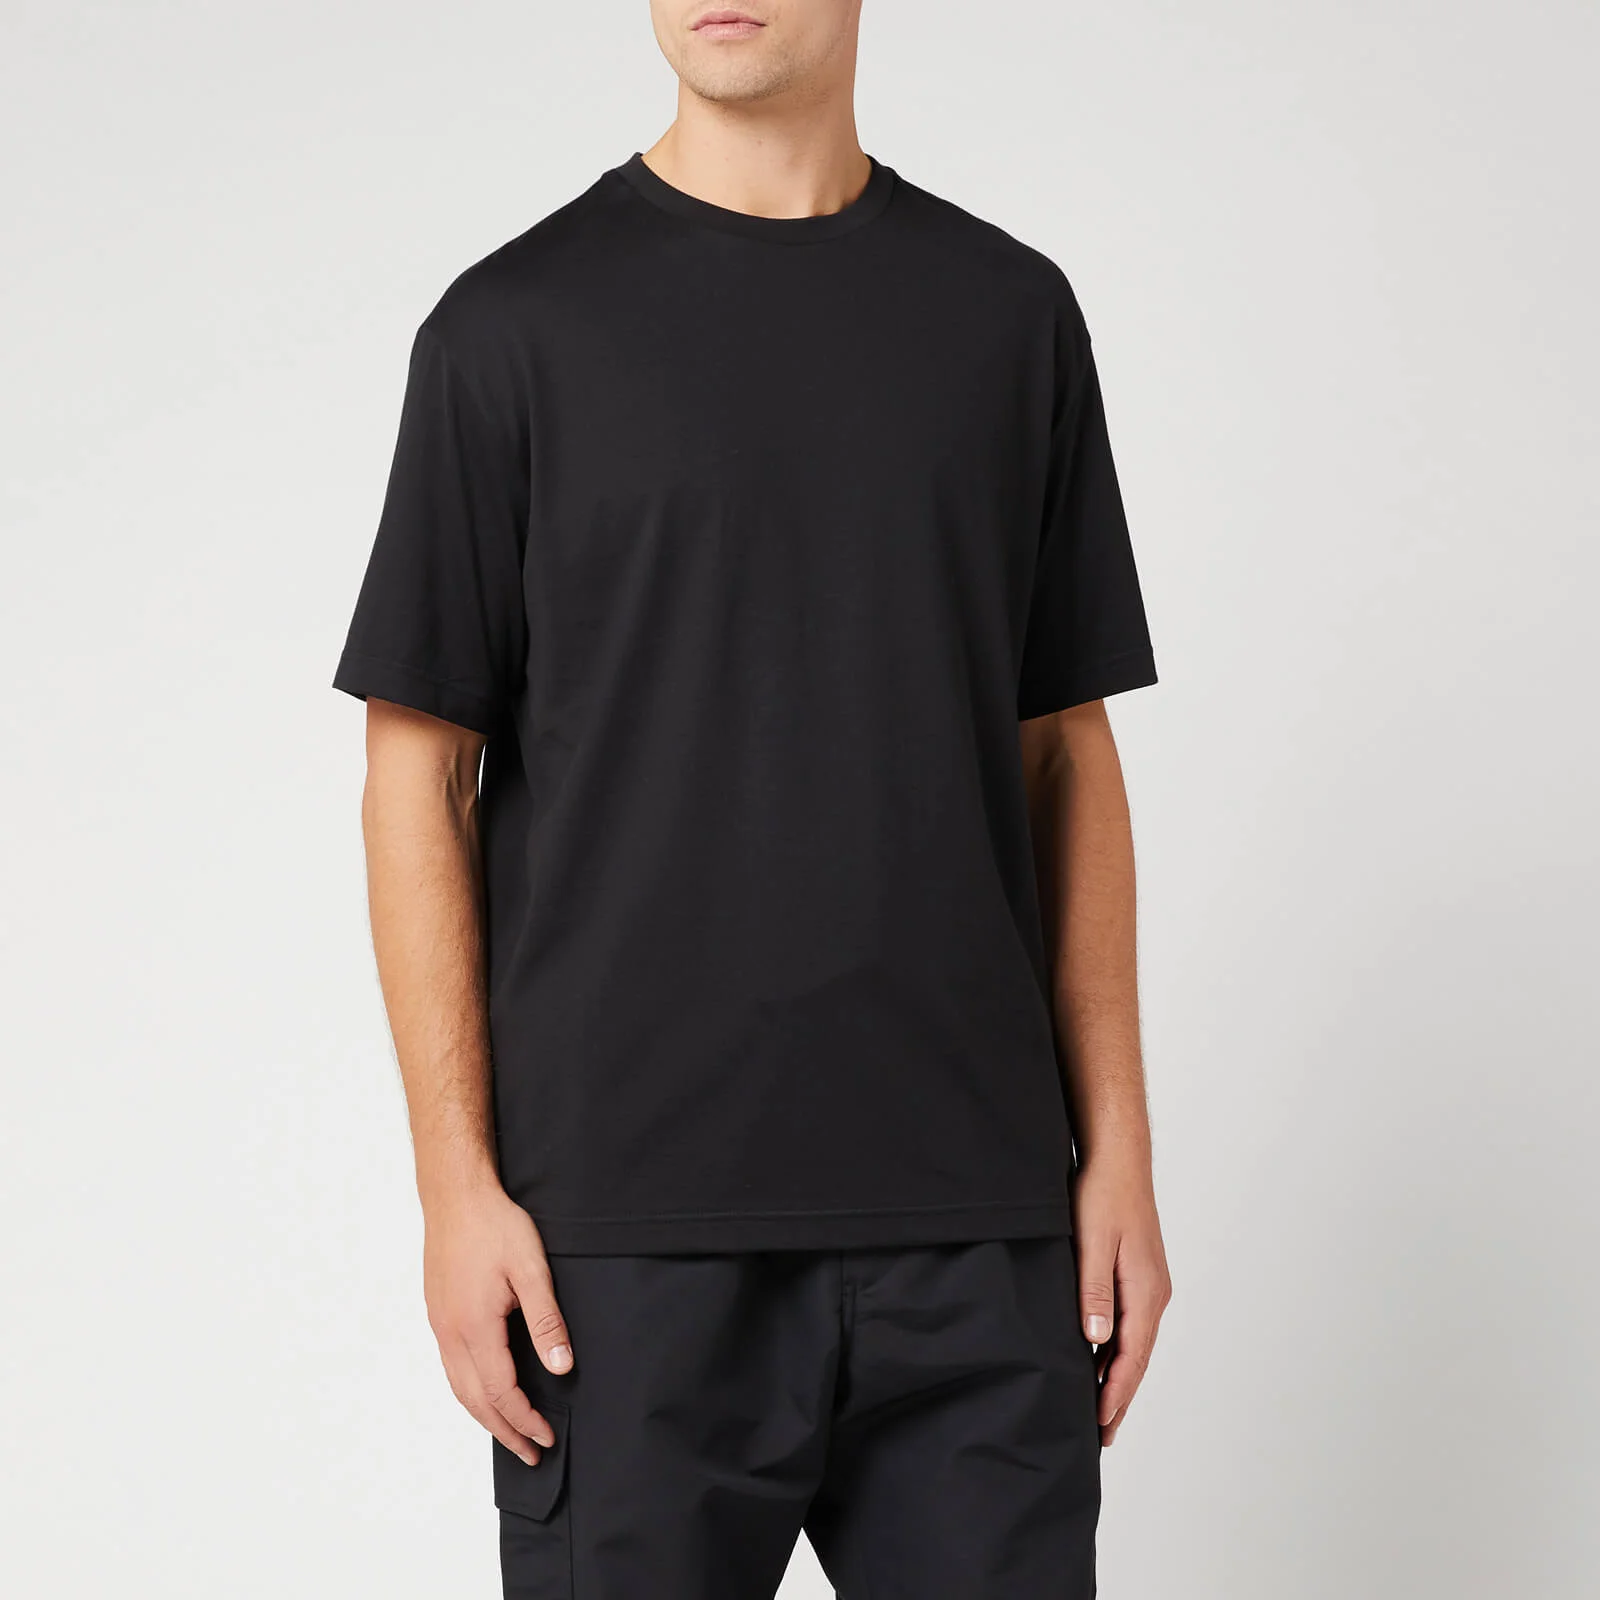 Y-3 Men's Toketa Print Short Sleeve T-Shirt - Black Image 1